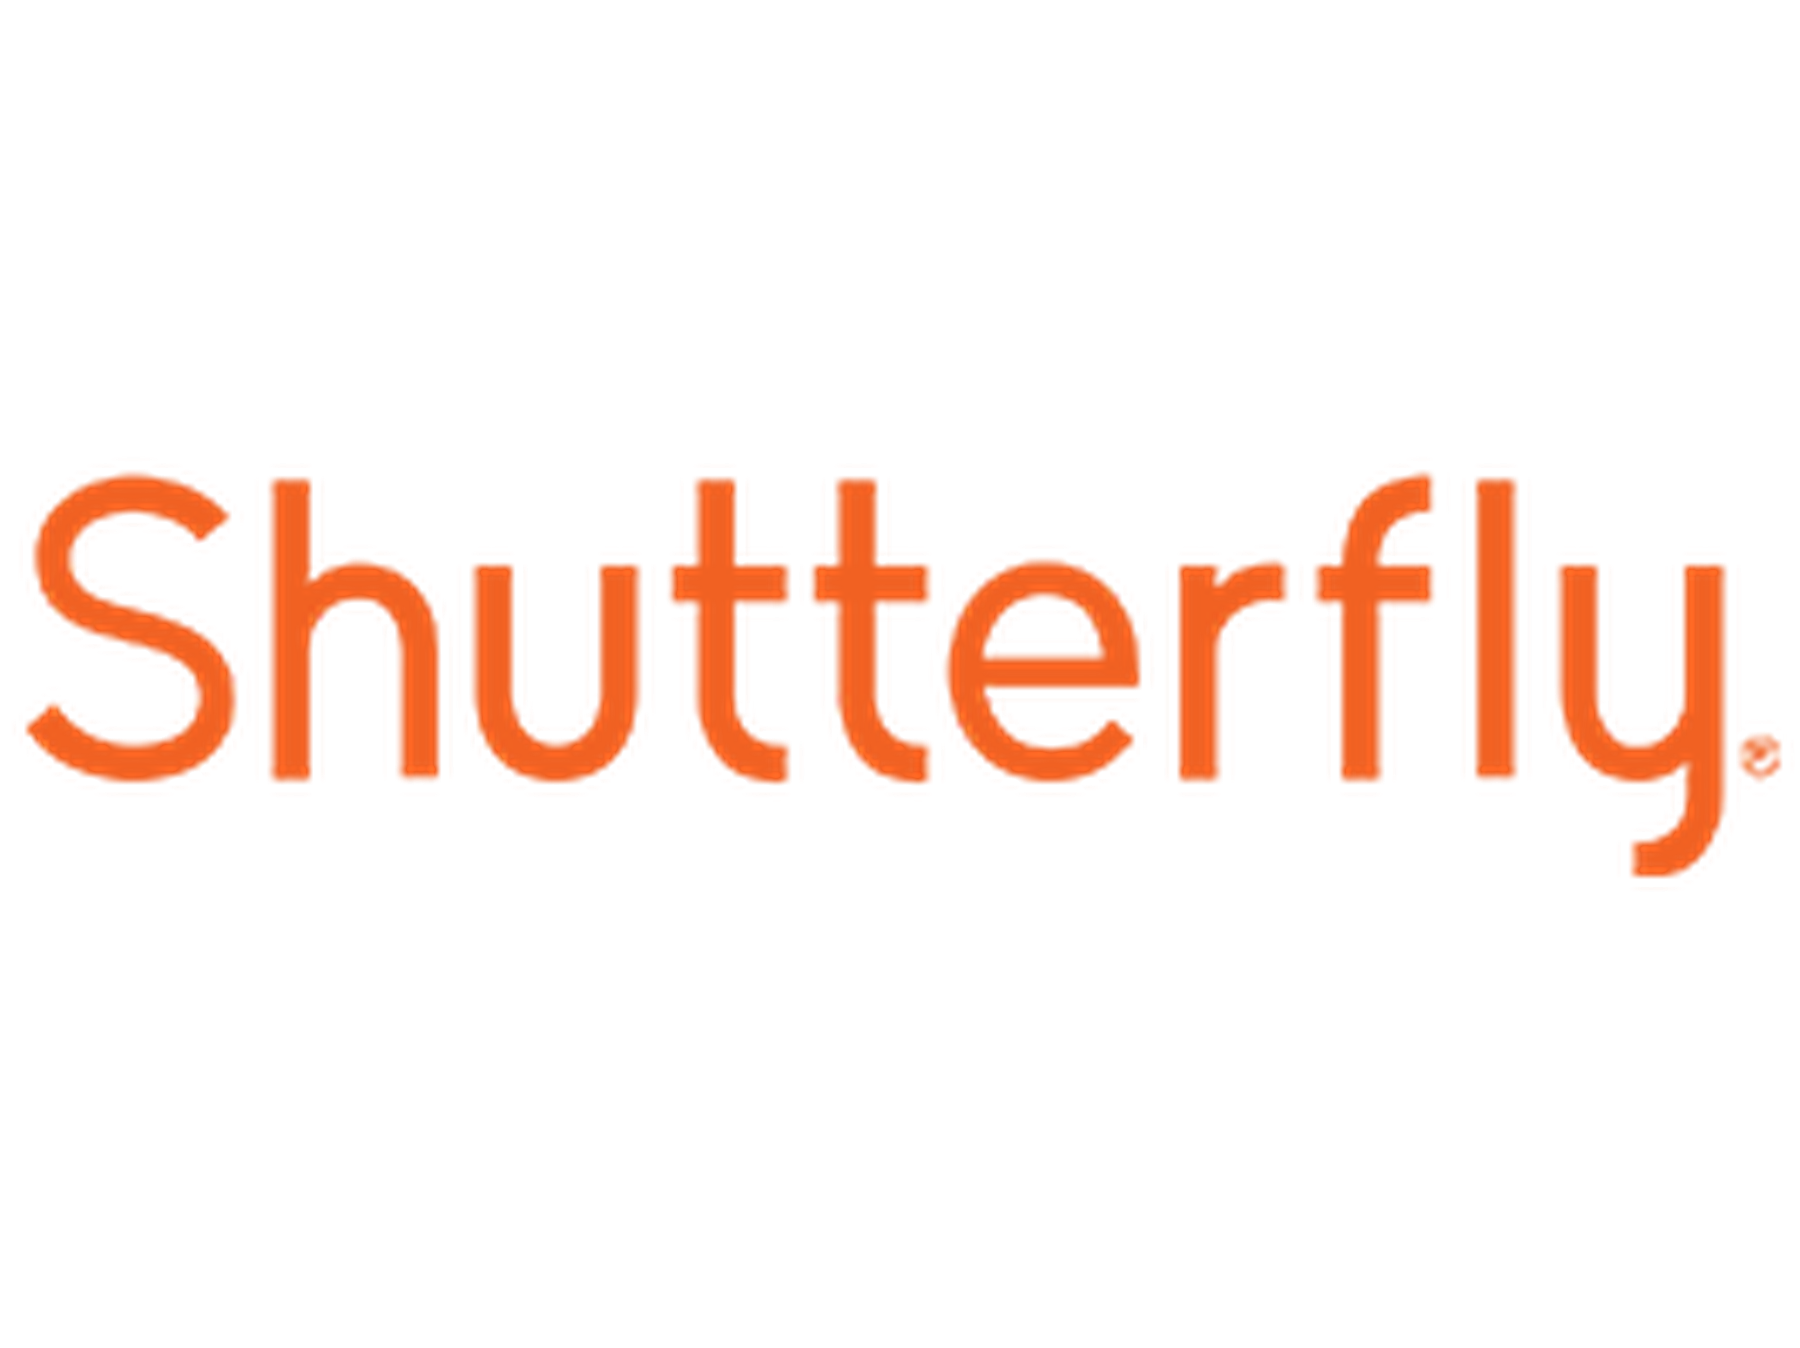 Shutterfly Promo Codes